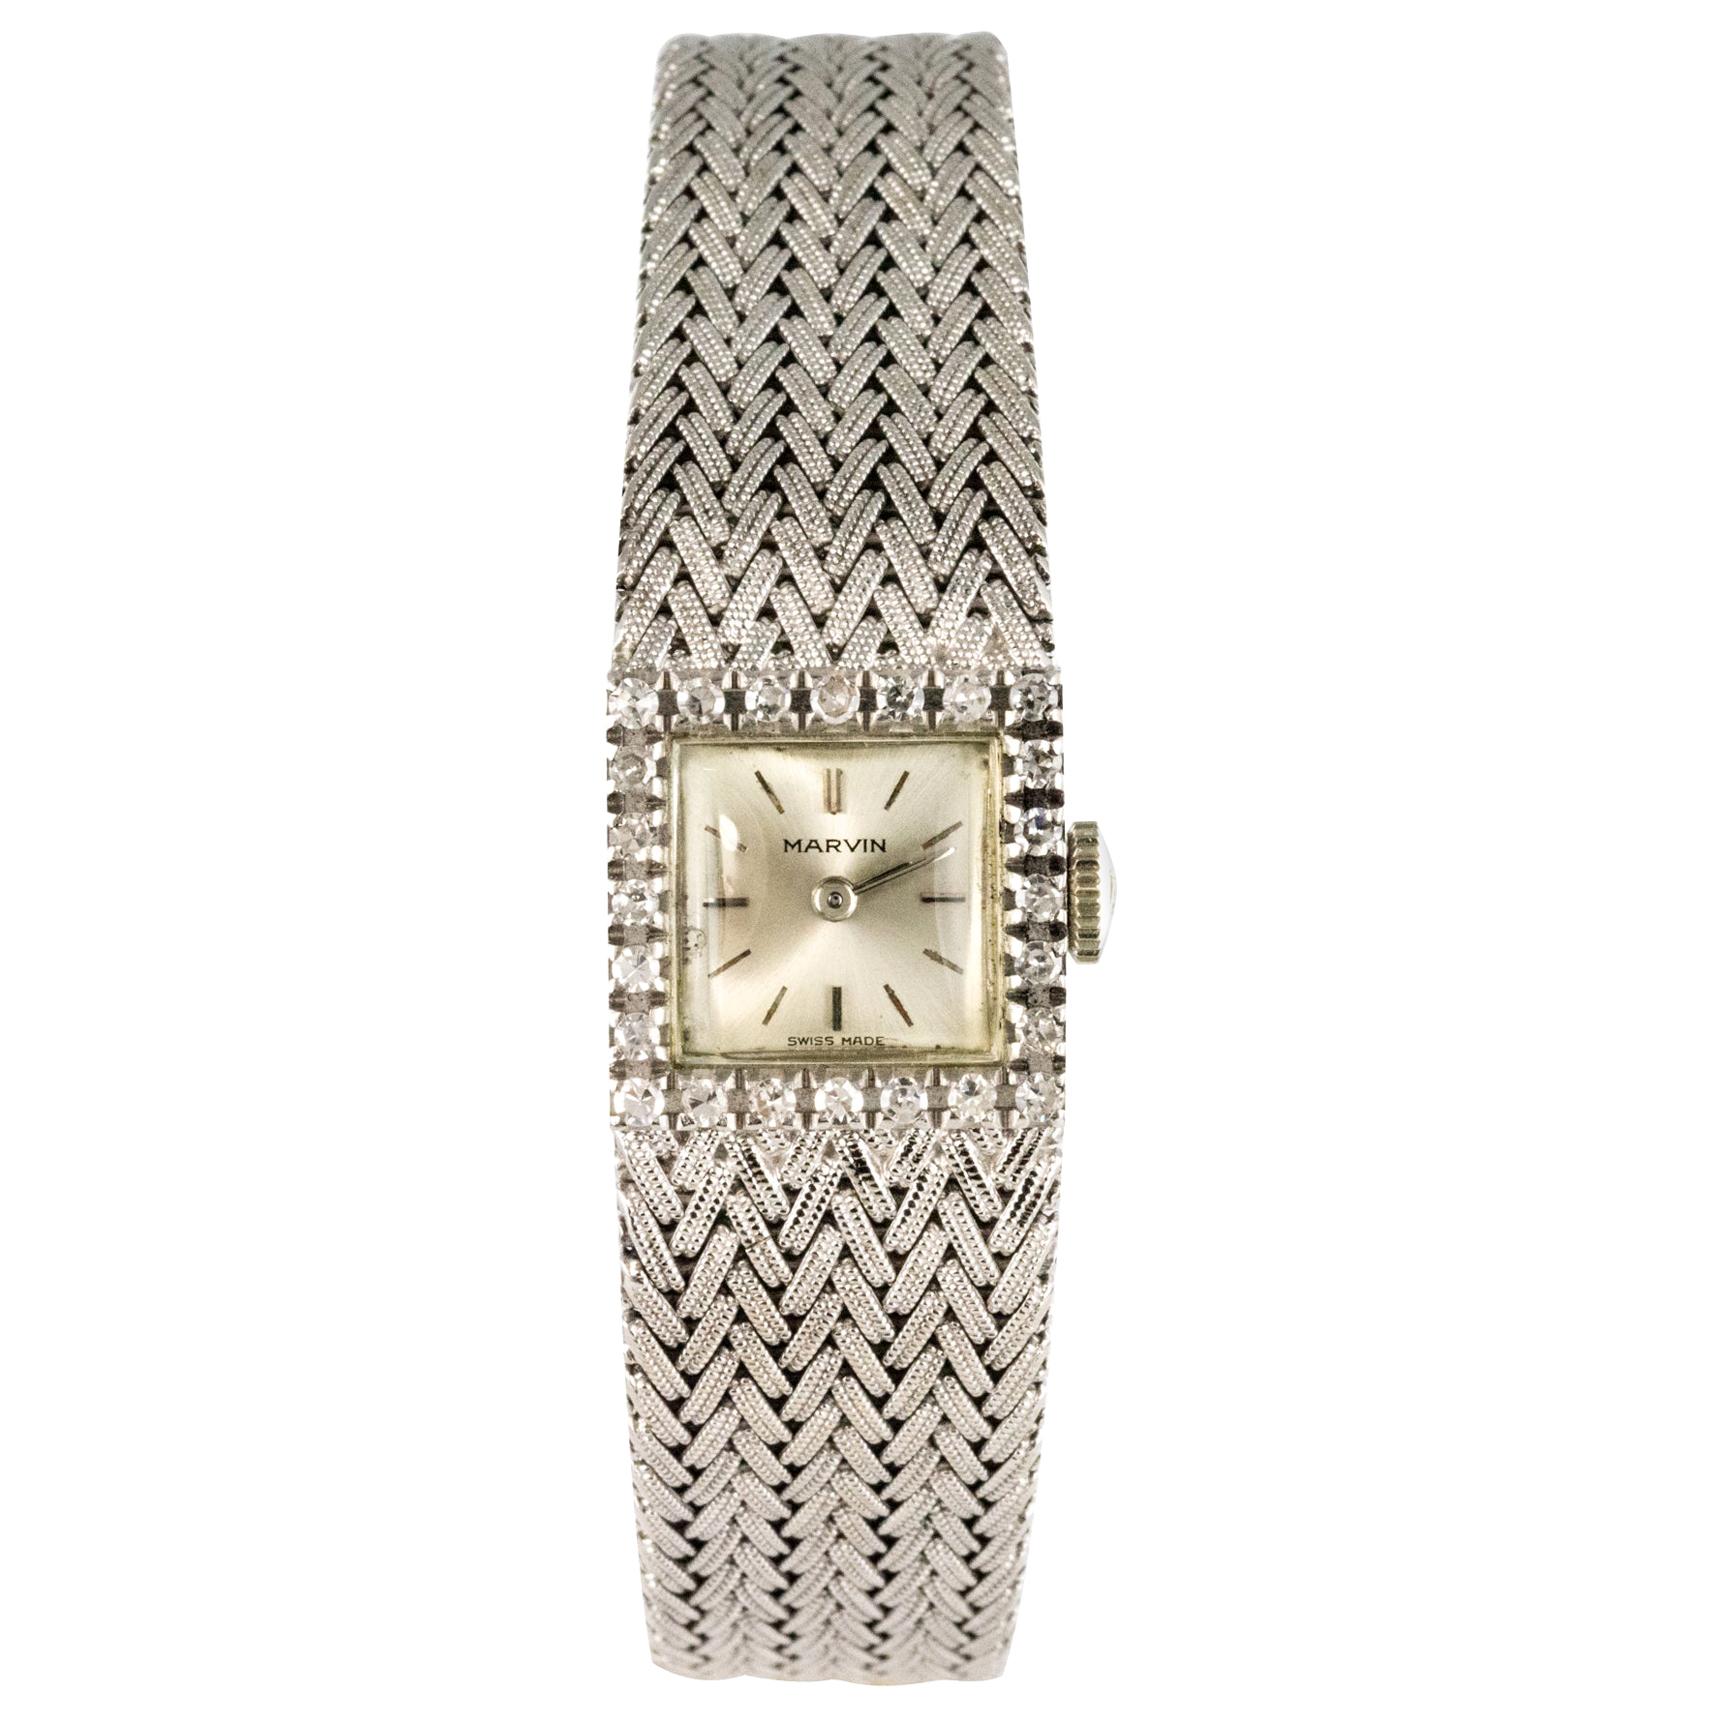 1960s Diamonds 18 Karat White Gold Ladies Marvin Watch